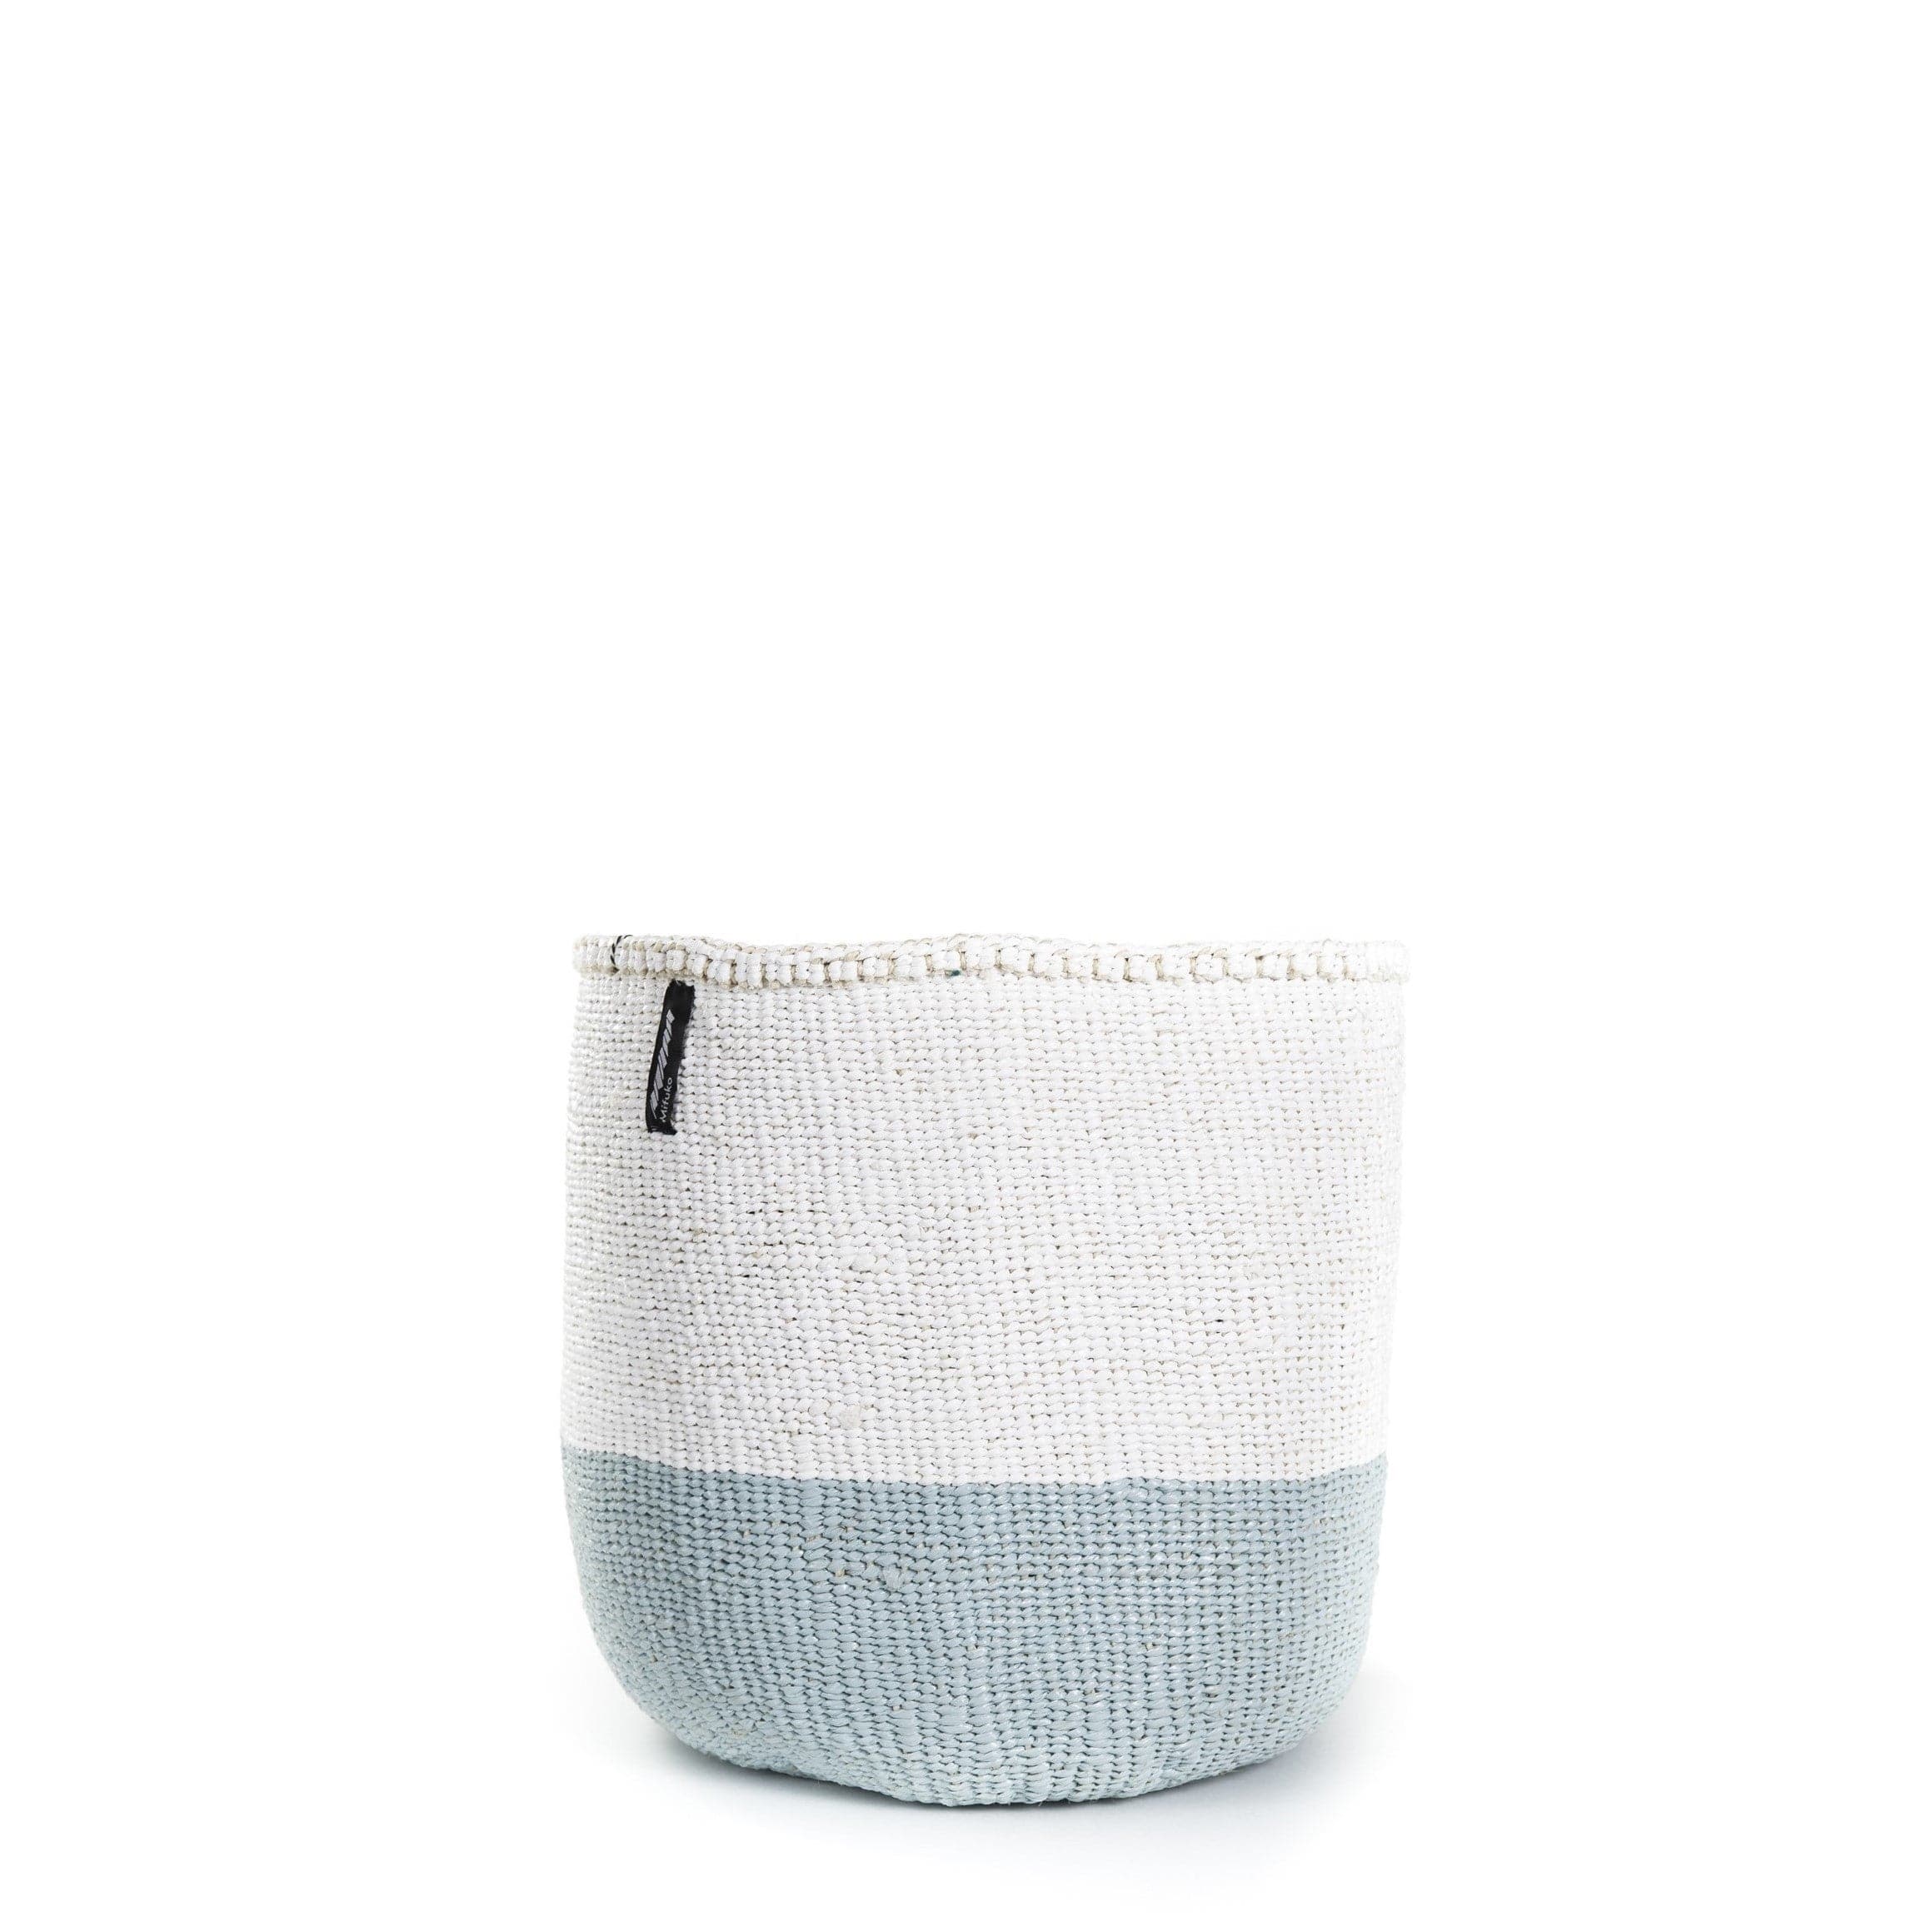 Mifuko Partly recycled plastic and sisal Medium size basket M Kiondo basket | White and light blue duo M